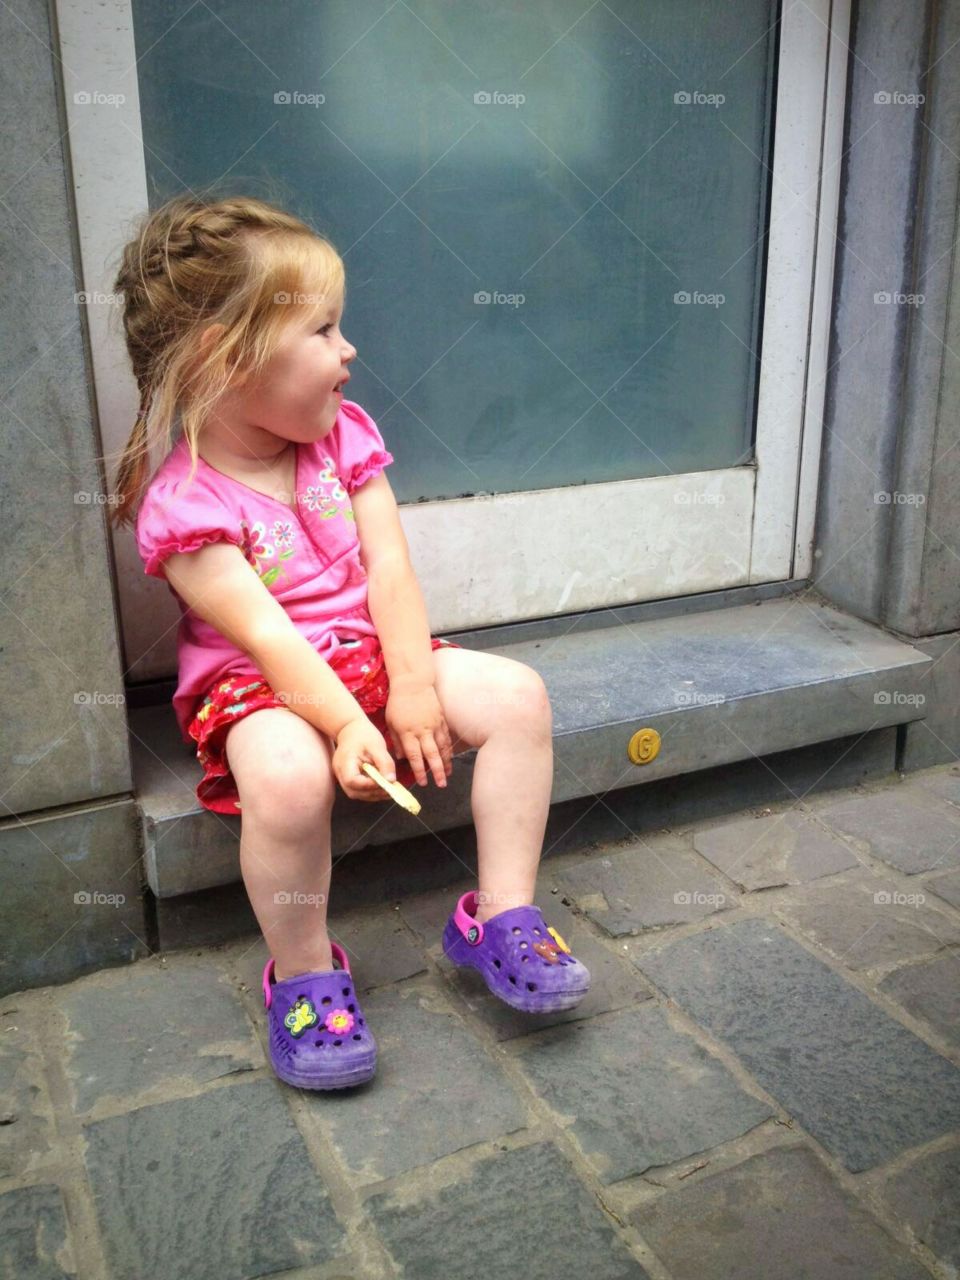 Sweet child enjoying cookie in the summer sun on the doorstep.